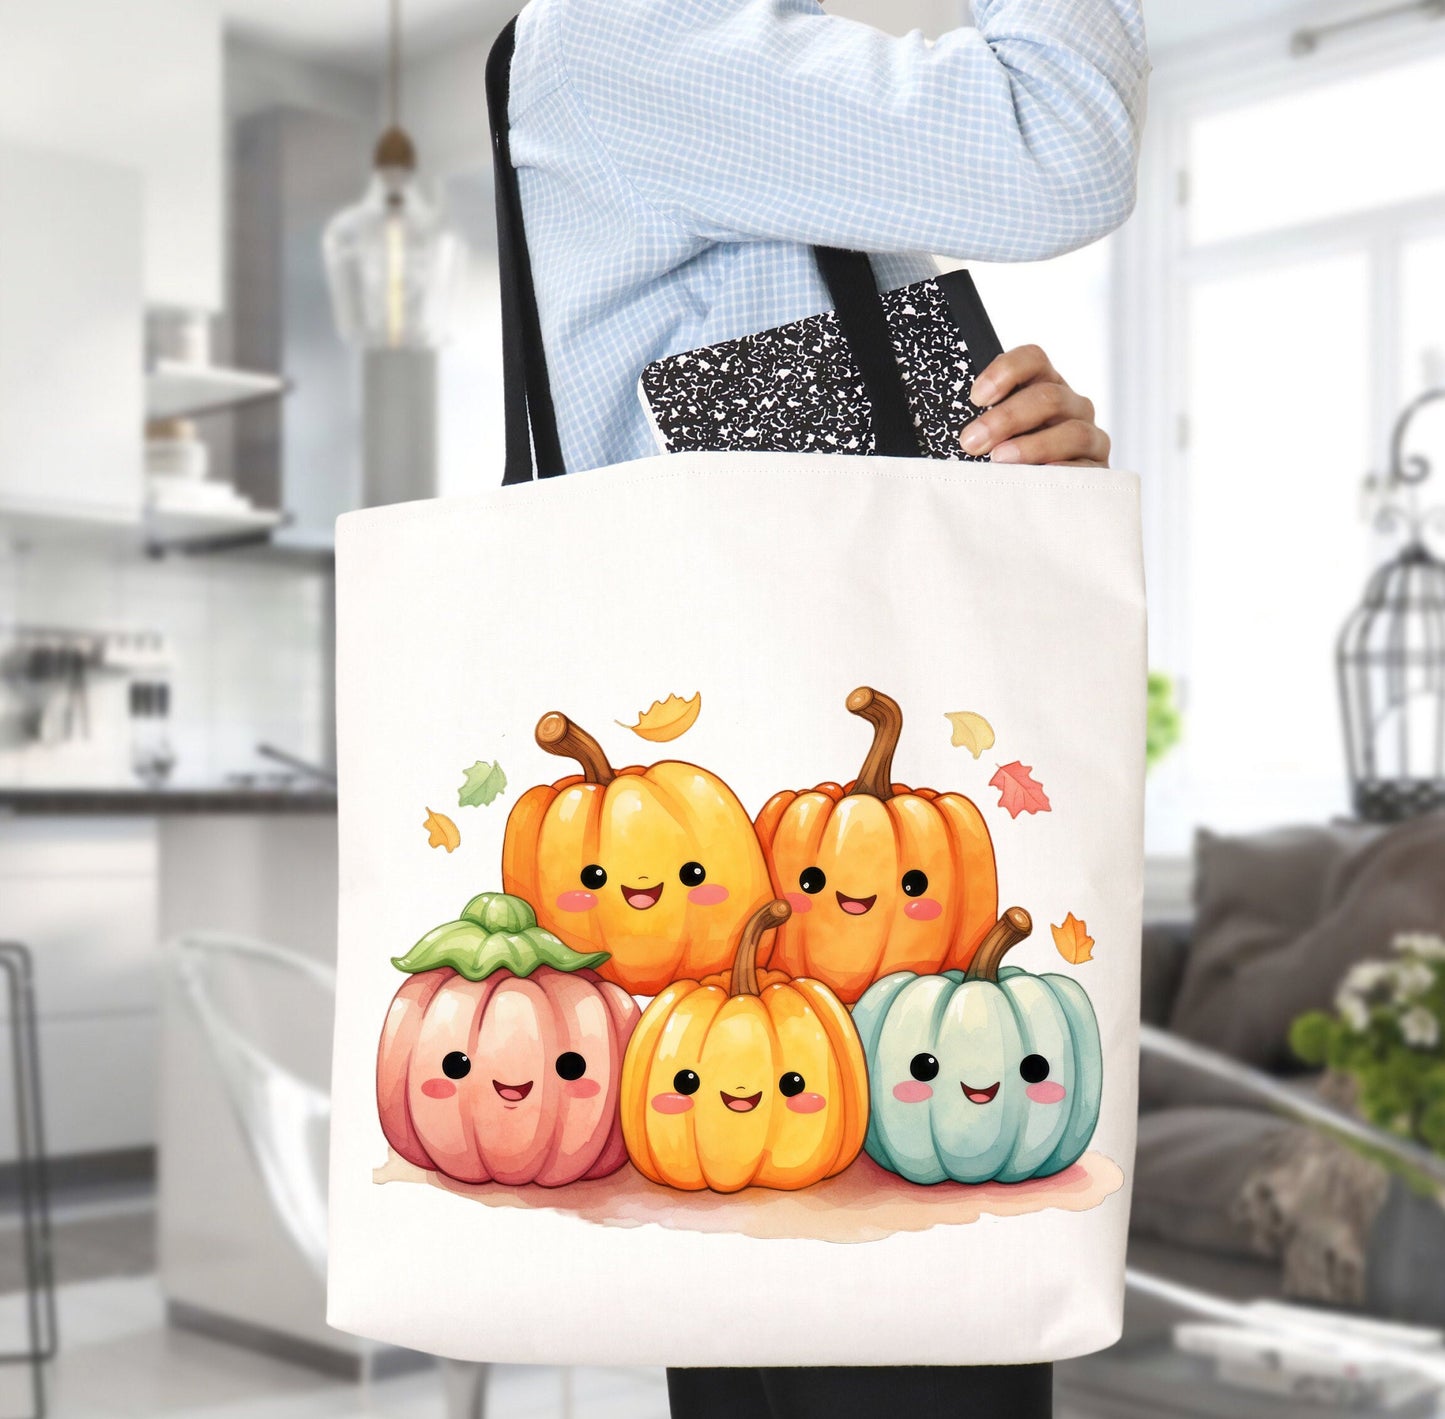 Adorable Tote bag with cute Pumpkins, Pumpkins Tote bag for any Occassion, Cute Pumpkin Tote bag for Halloween,  Mens, Womens, Kids Tote bag